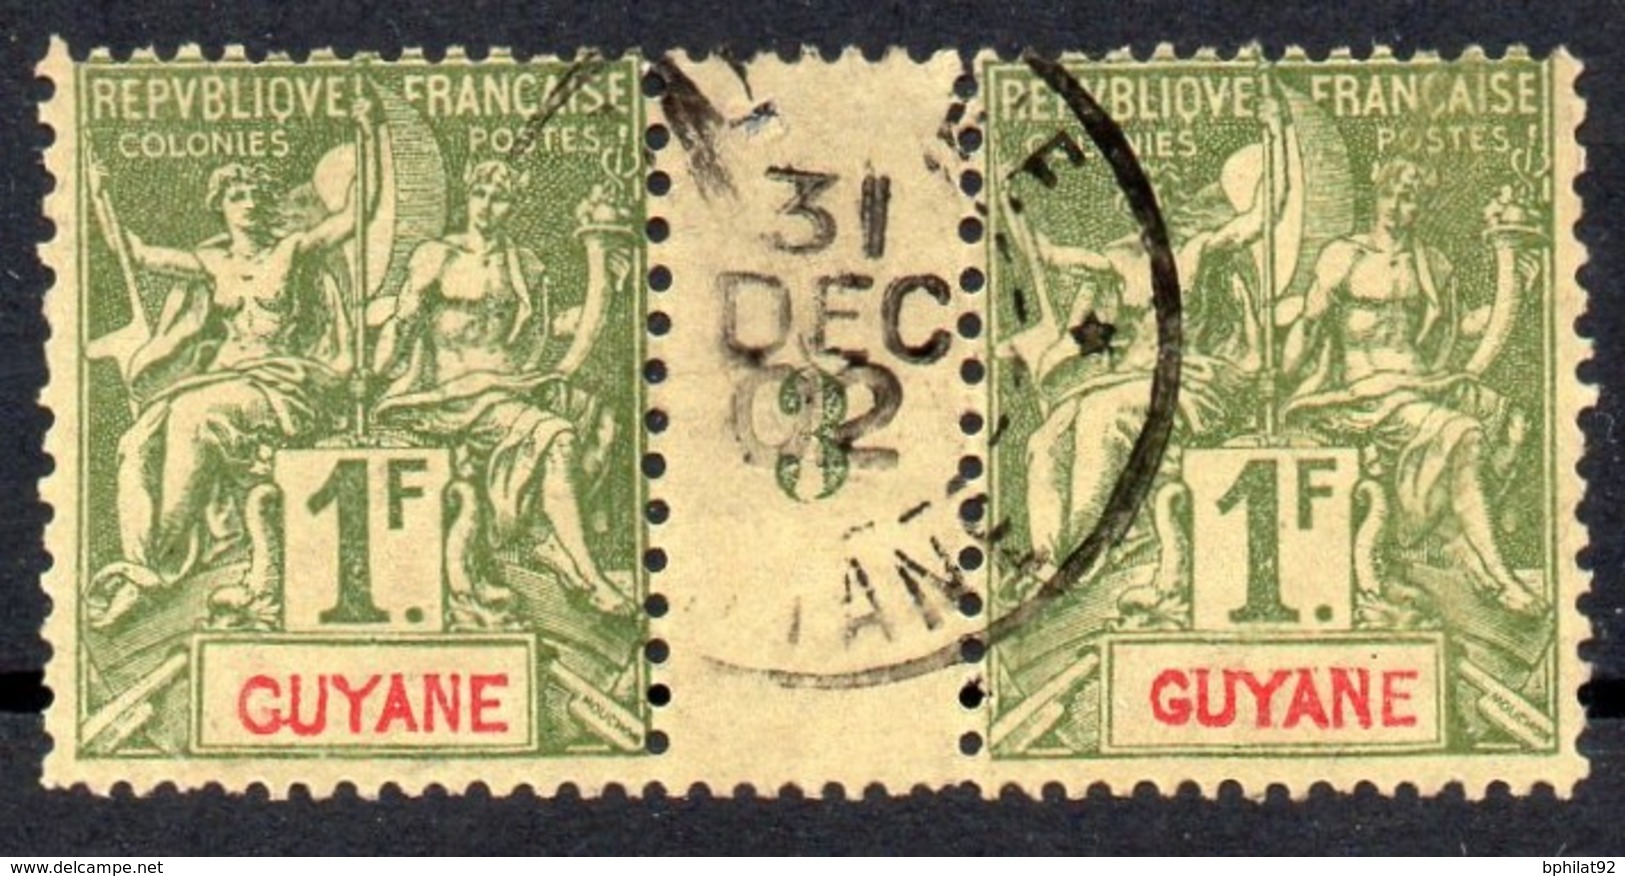 !!! PRIX FIXE : GUYANE, PAIRE DU N°42 AVEC MILLESIME 3 OBLITEREE - Used Stamps